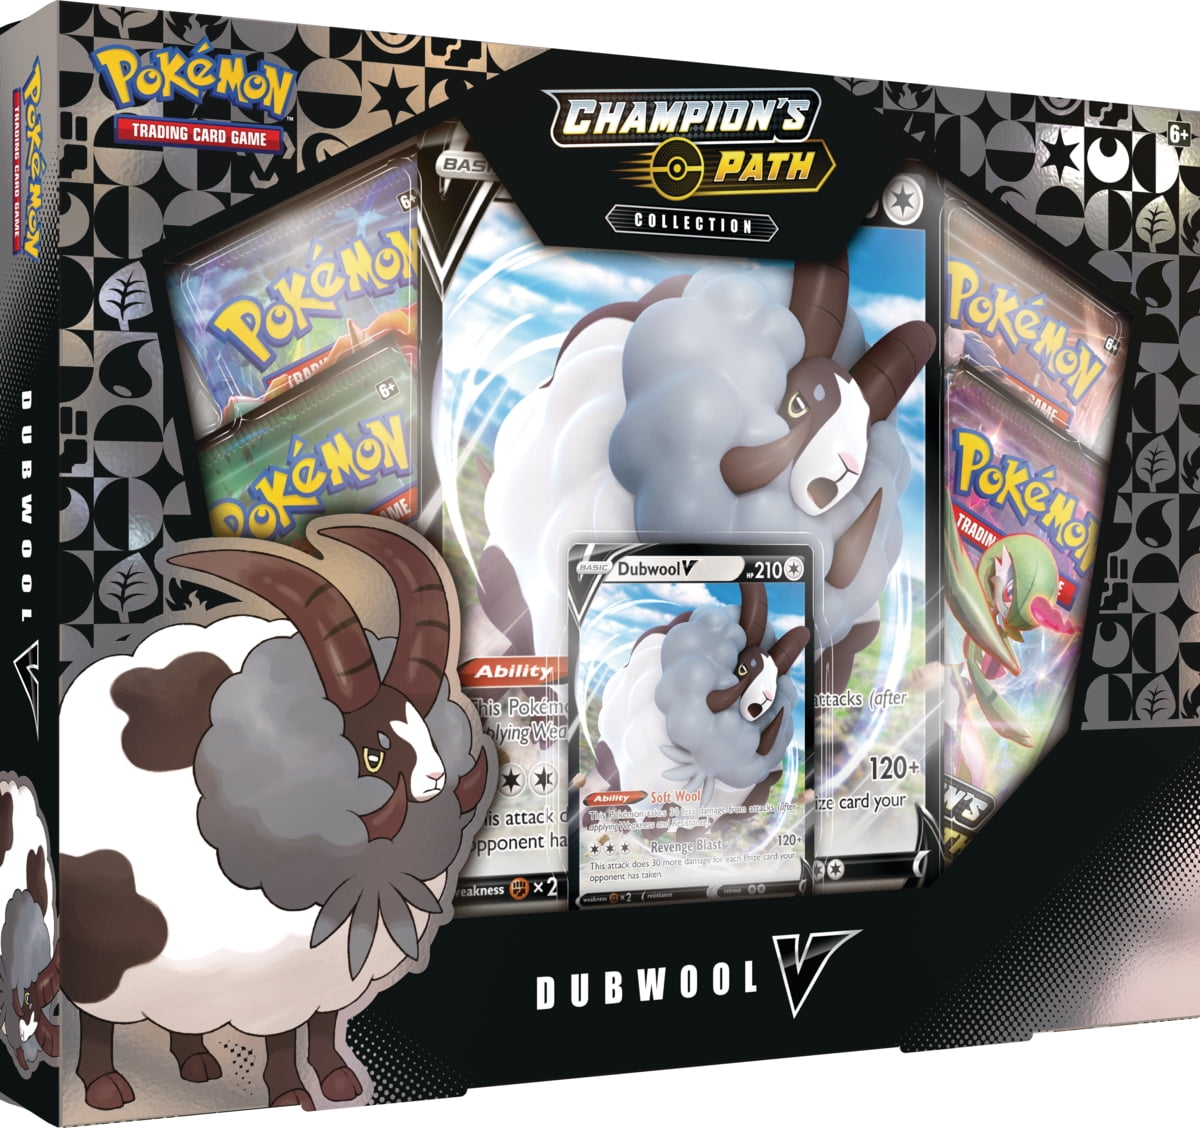 Pokemon TCG Champions Path Collection Box Hatterene V 